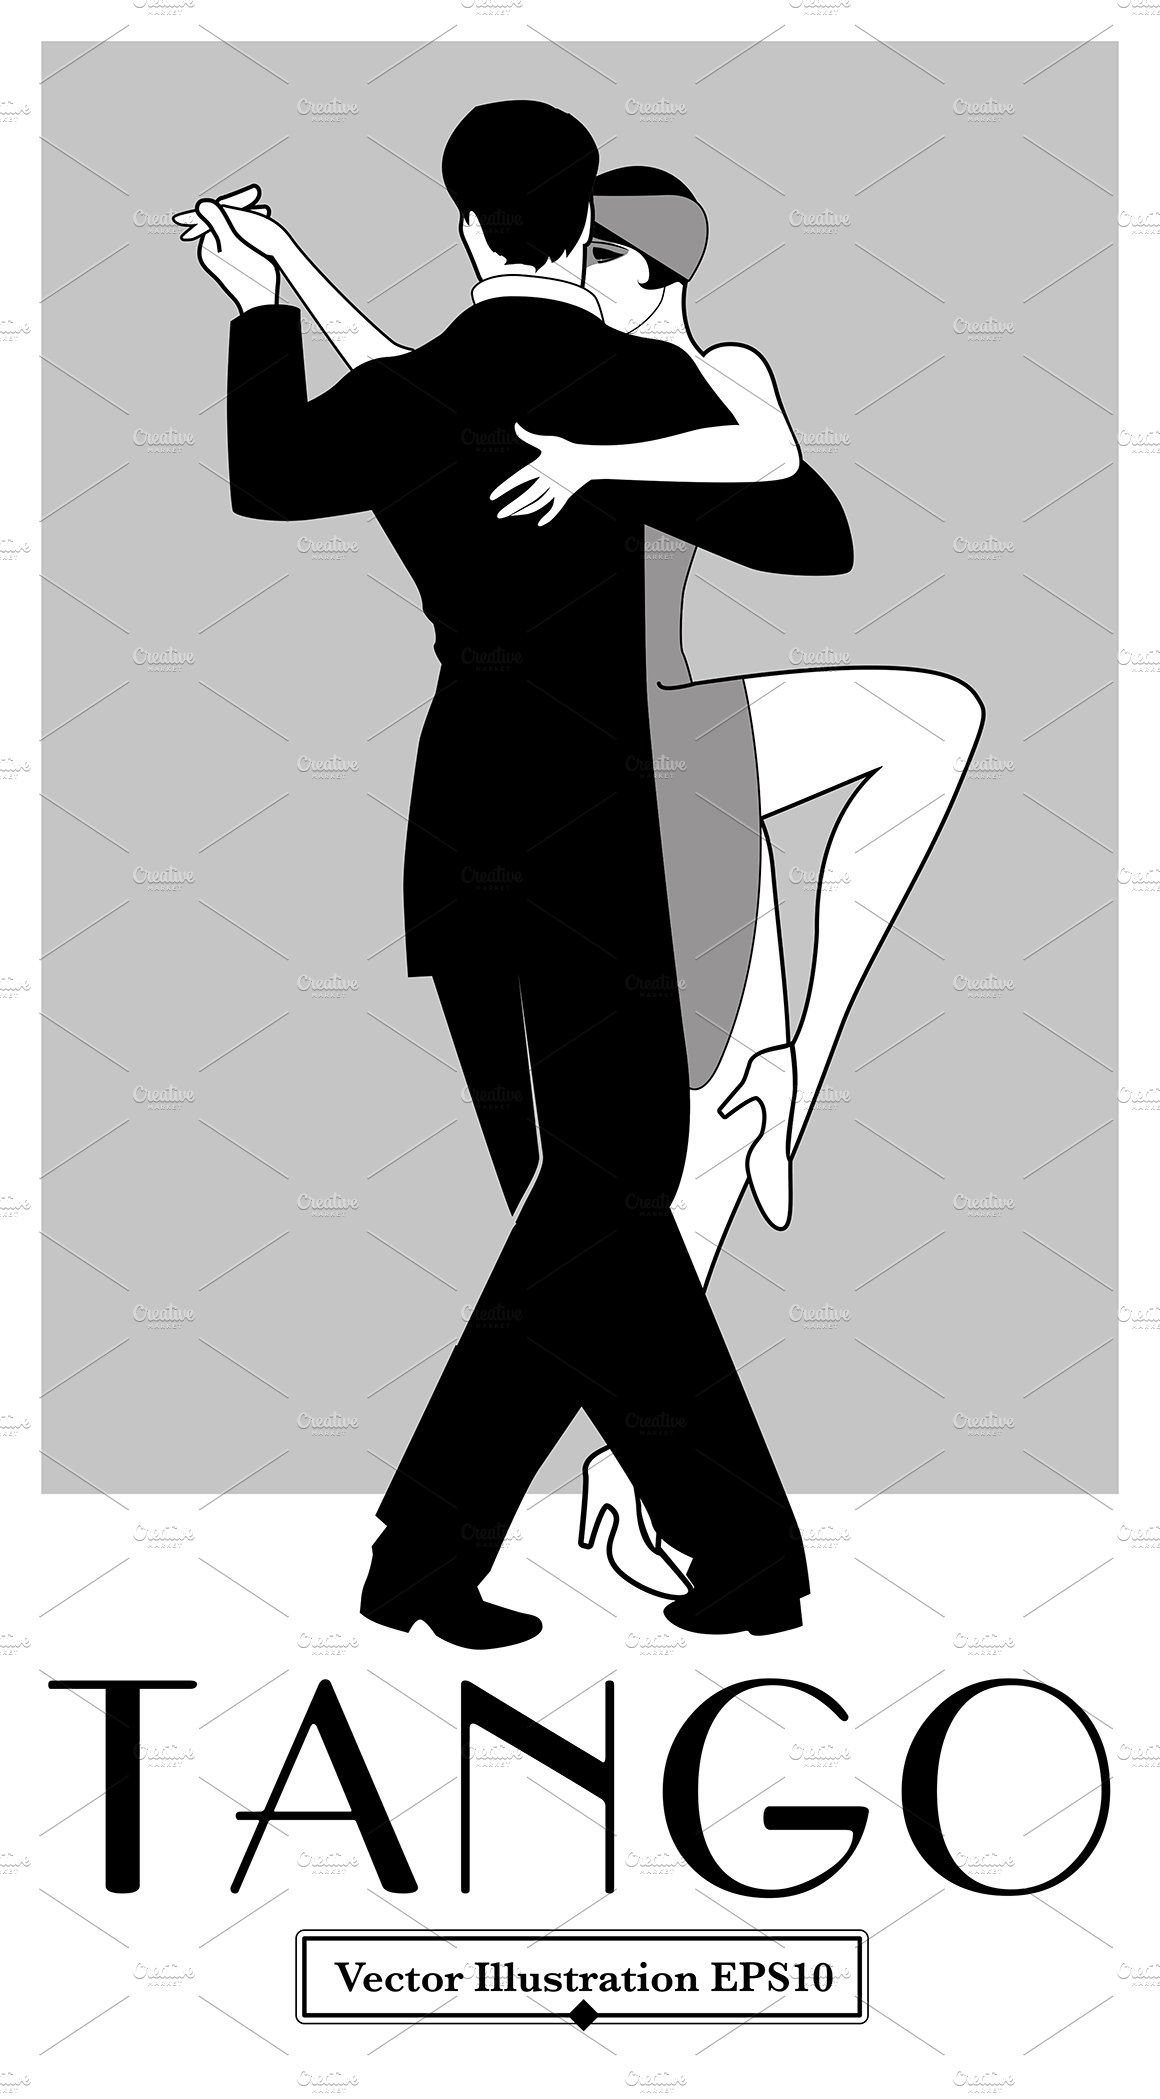 Tango Poster Retro Style I preview image.